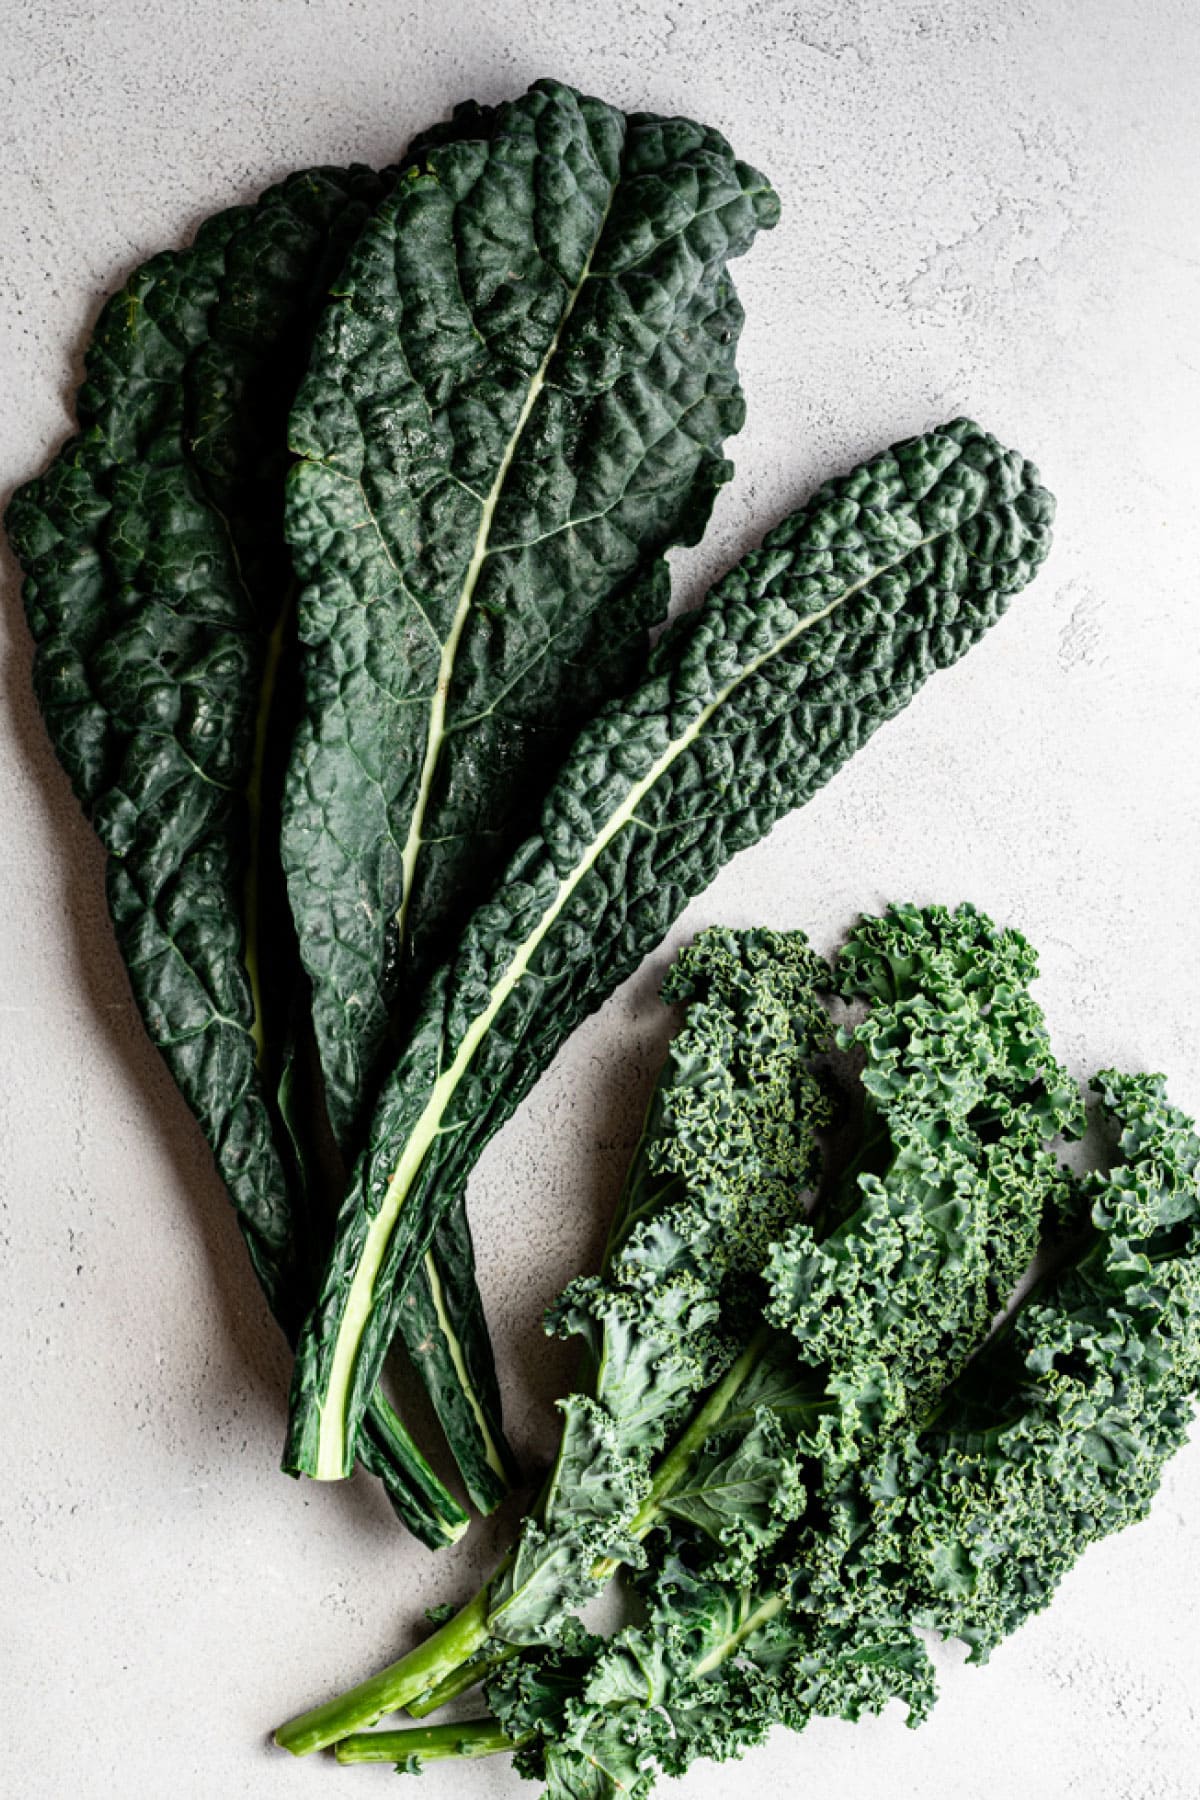 2 types of kale overhead